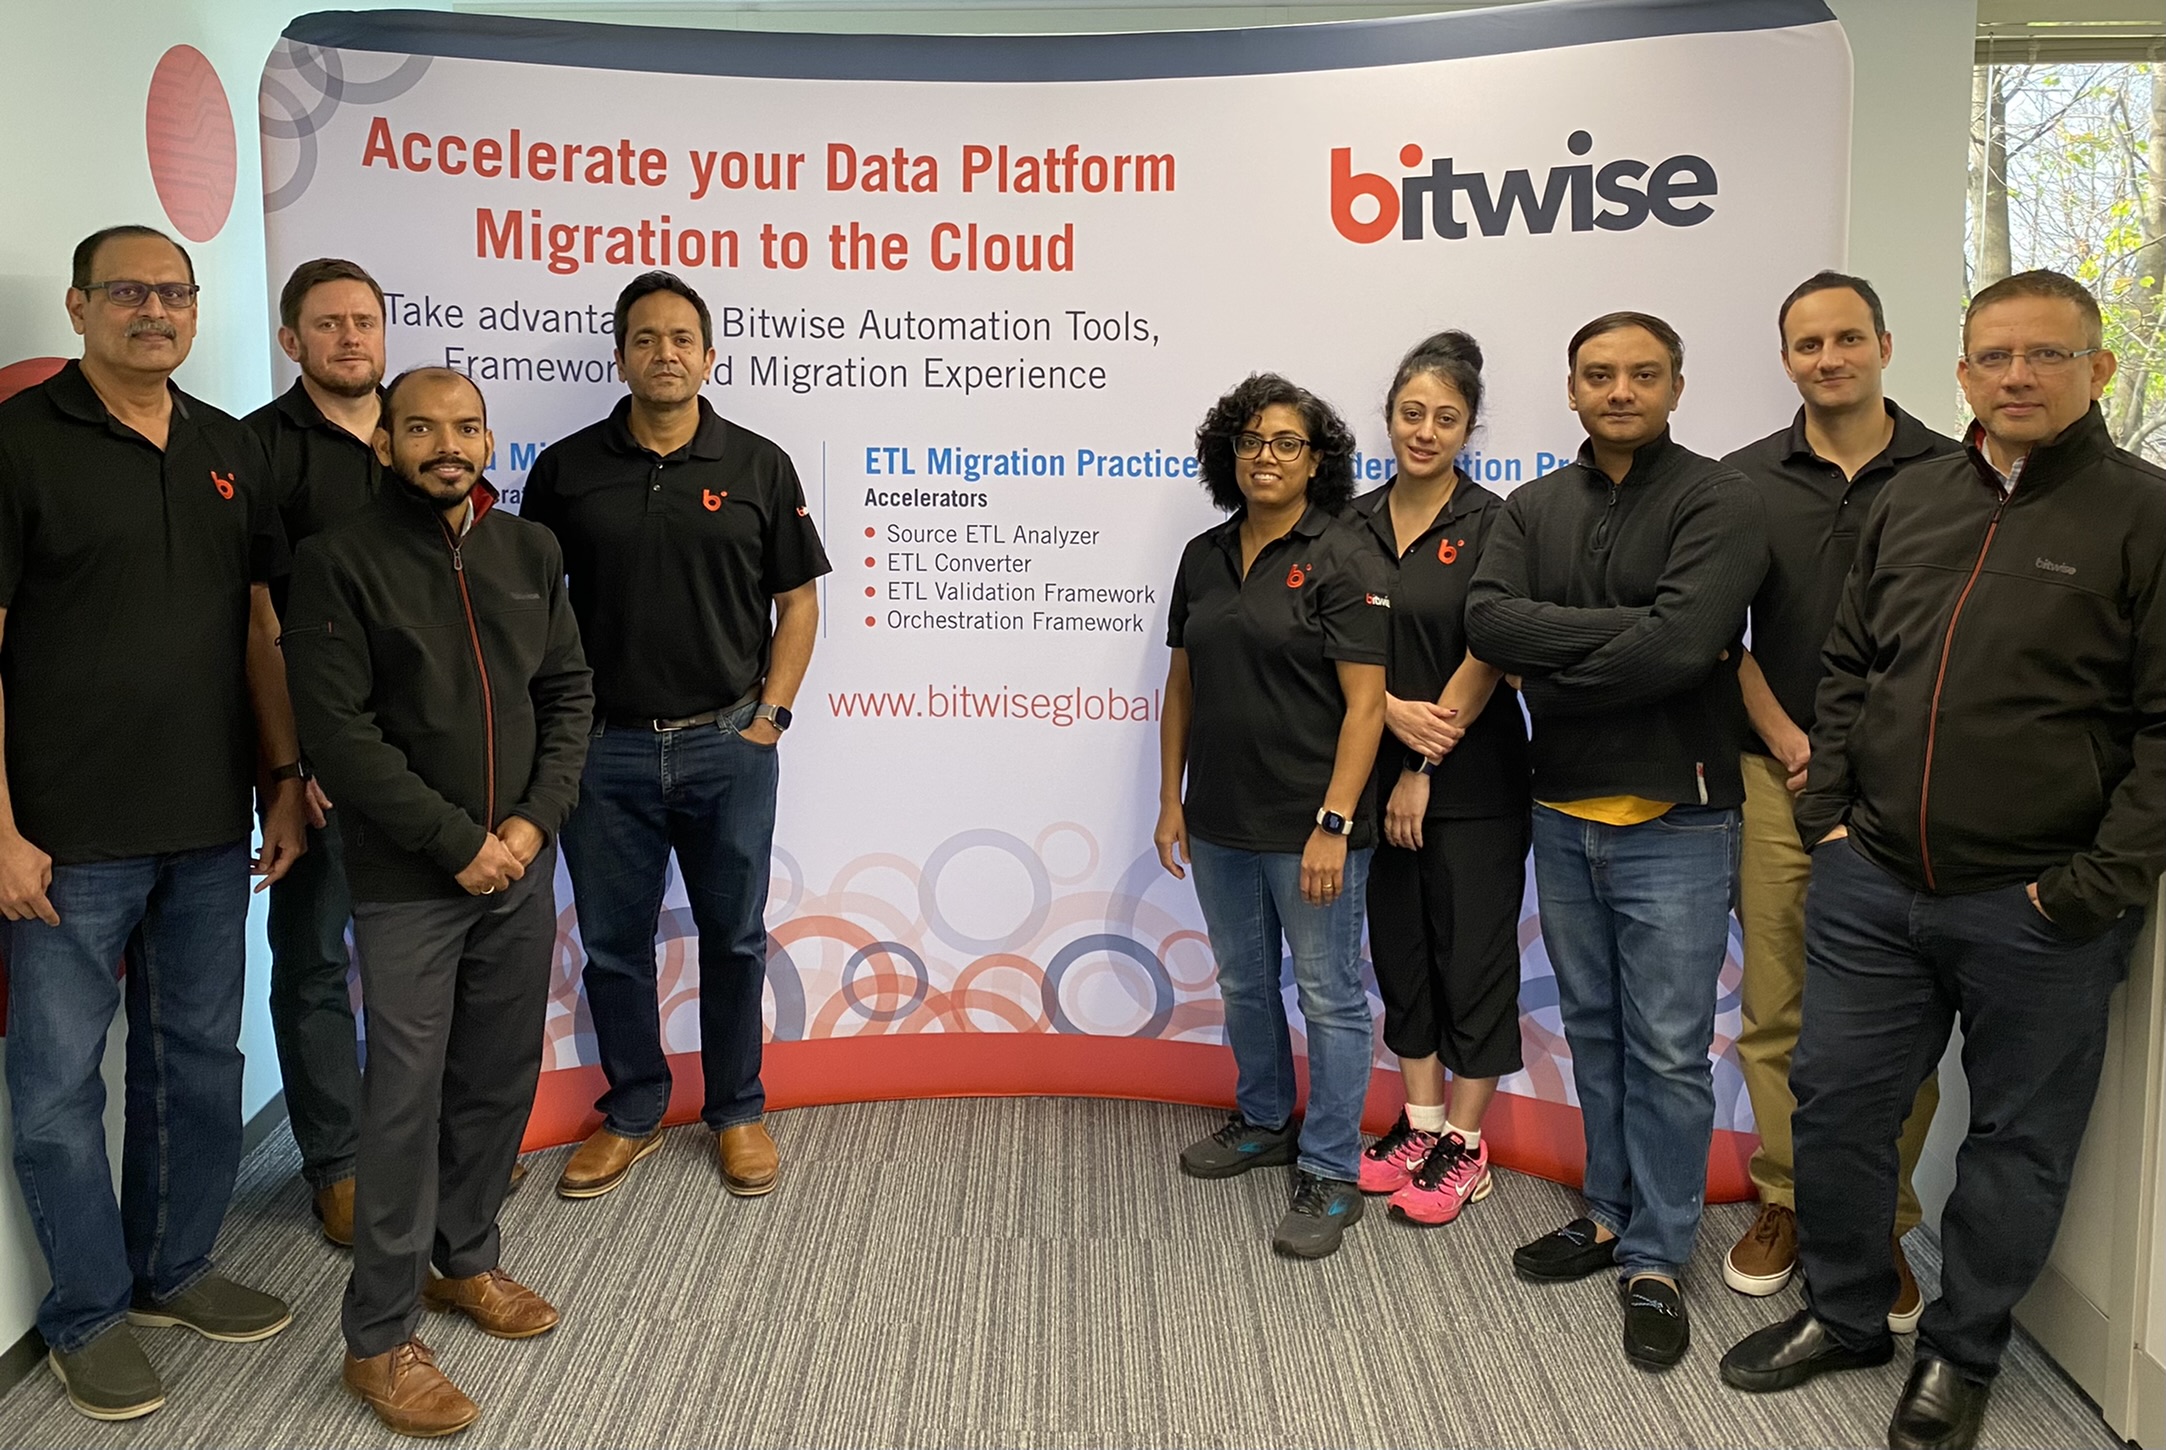 Bitwise Introduces Data Platform Cloud Migration Suite at PASS Data Community Summit